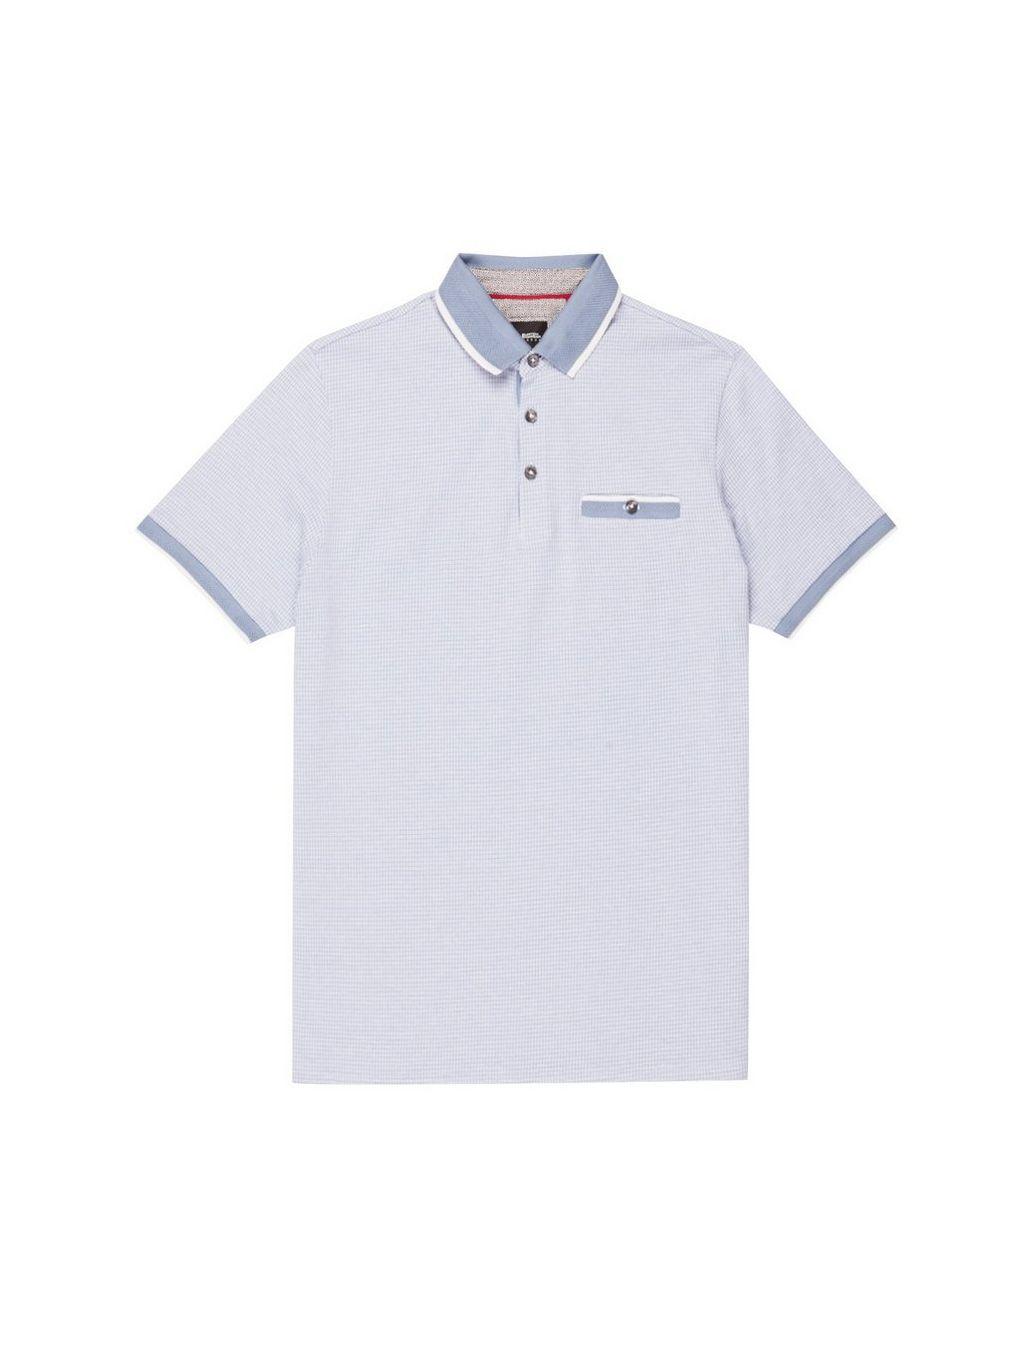 Light Blue Polo Logo - Light Blue Grid Jacquard Polo Shirt - Burton Menswear